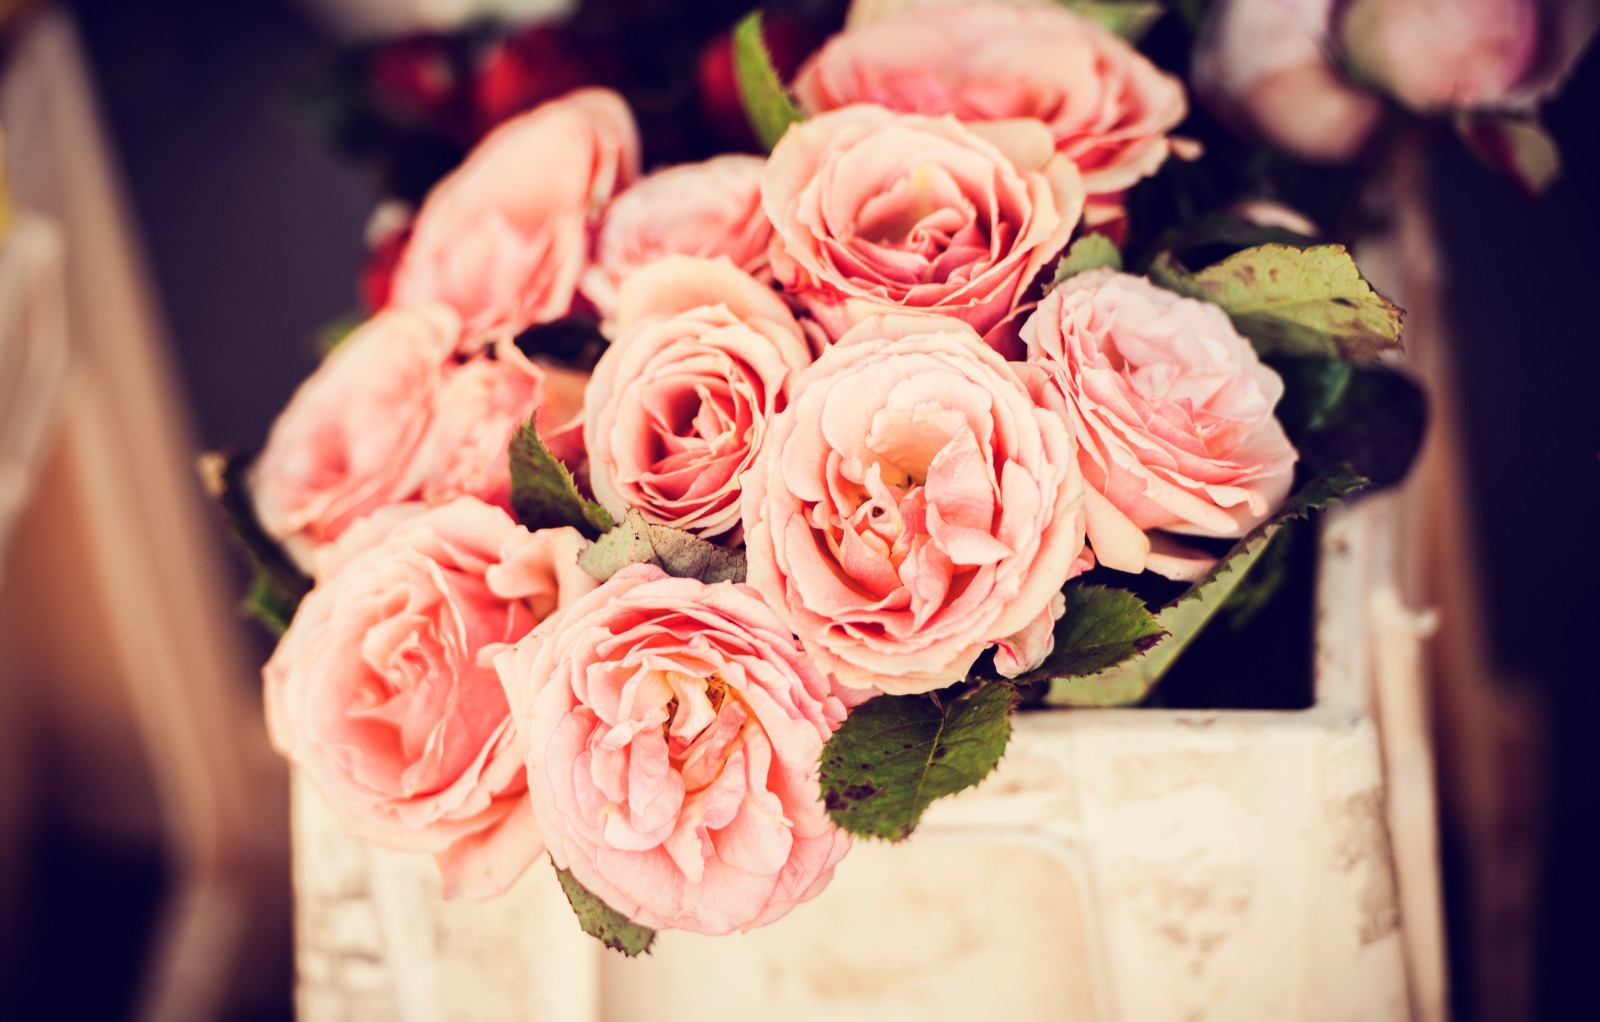 mawar, Merah Jambu, bunga-bunga, kelopak, tunas, keranjang